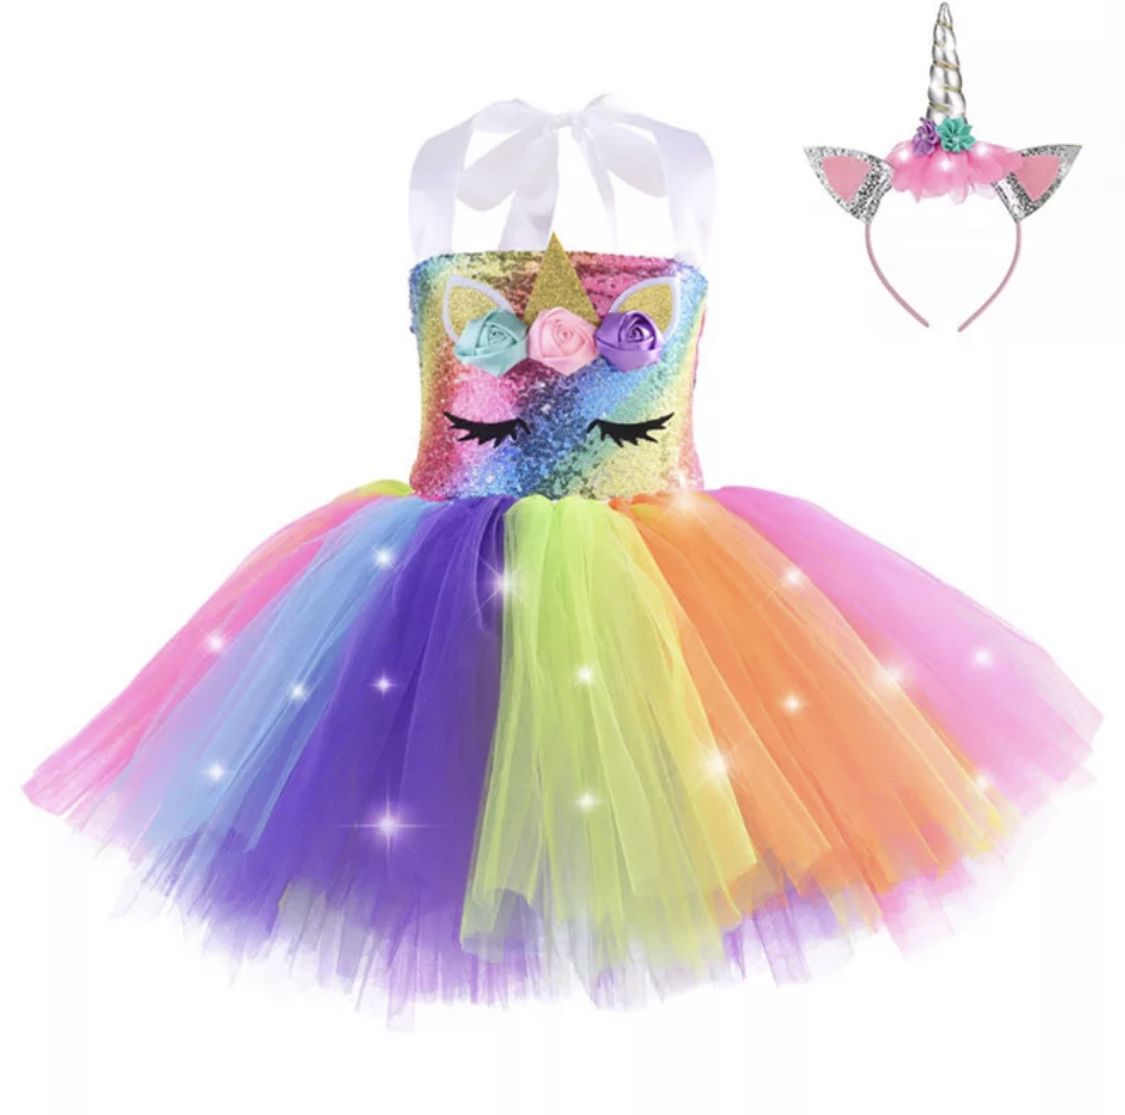 Brand New, Super cool lighted unicorn dress with lighted unicorn headband 🦄